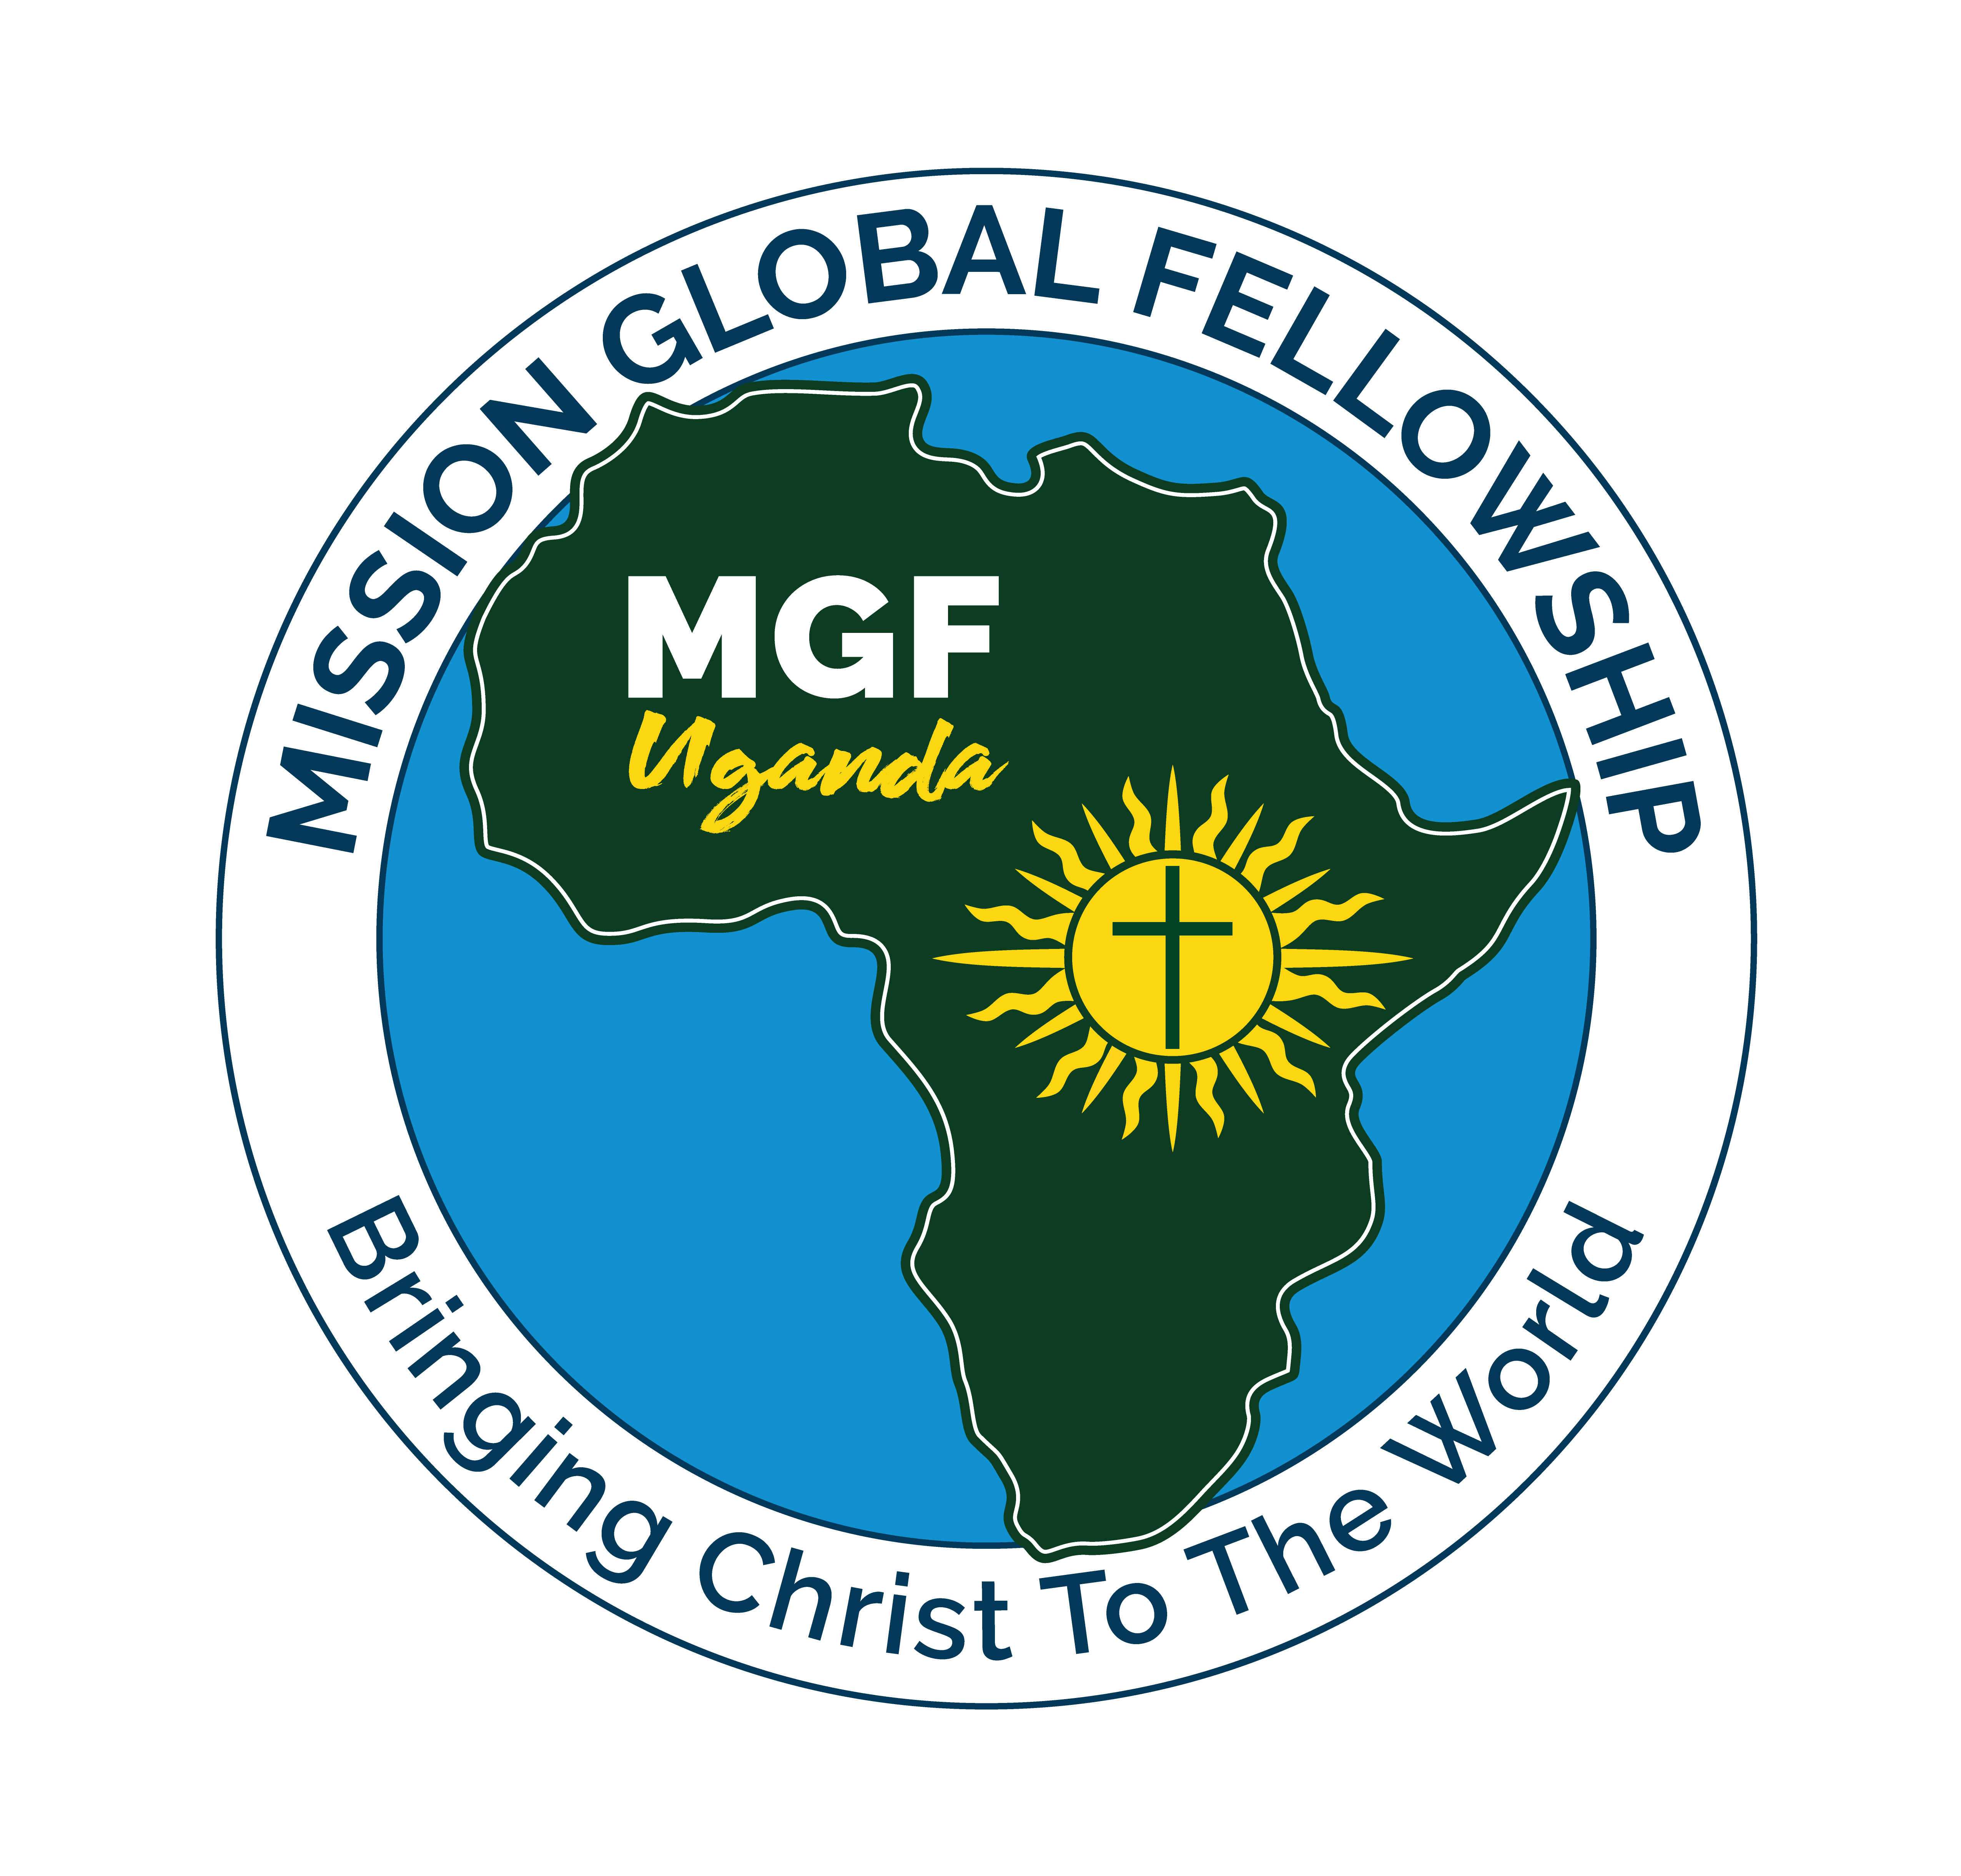 Mission Global Fellowship